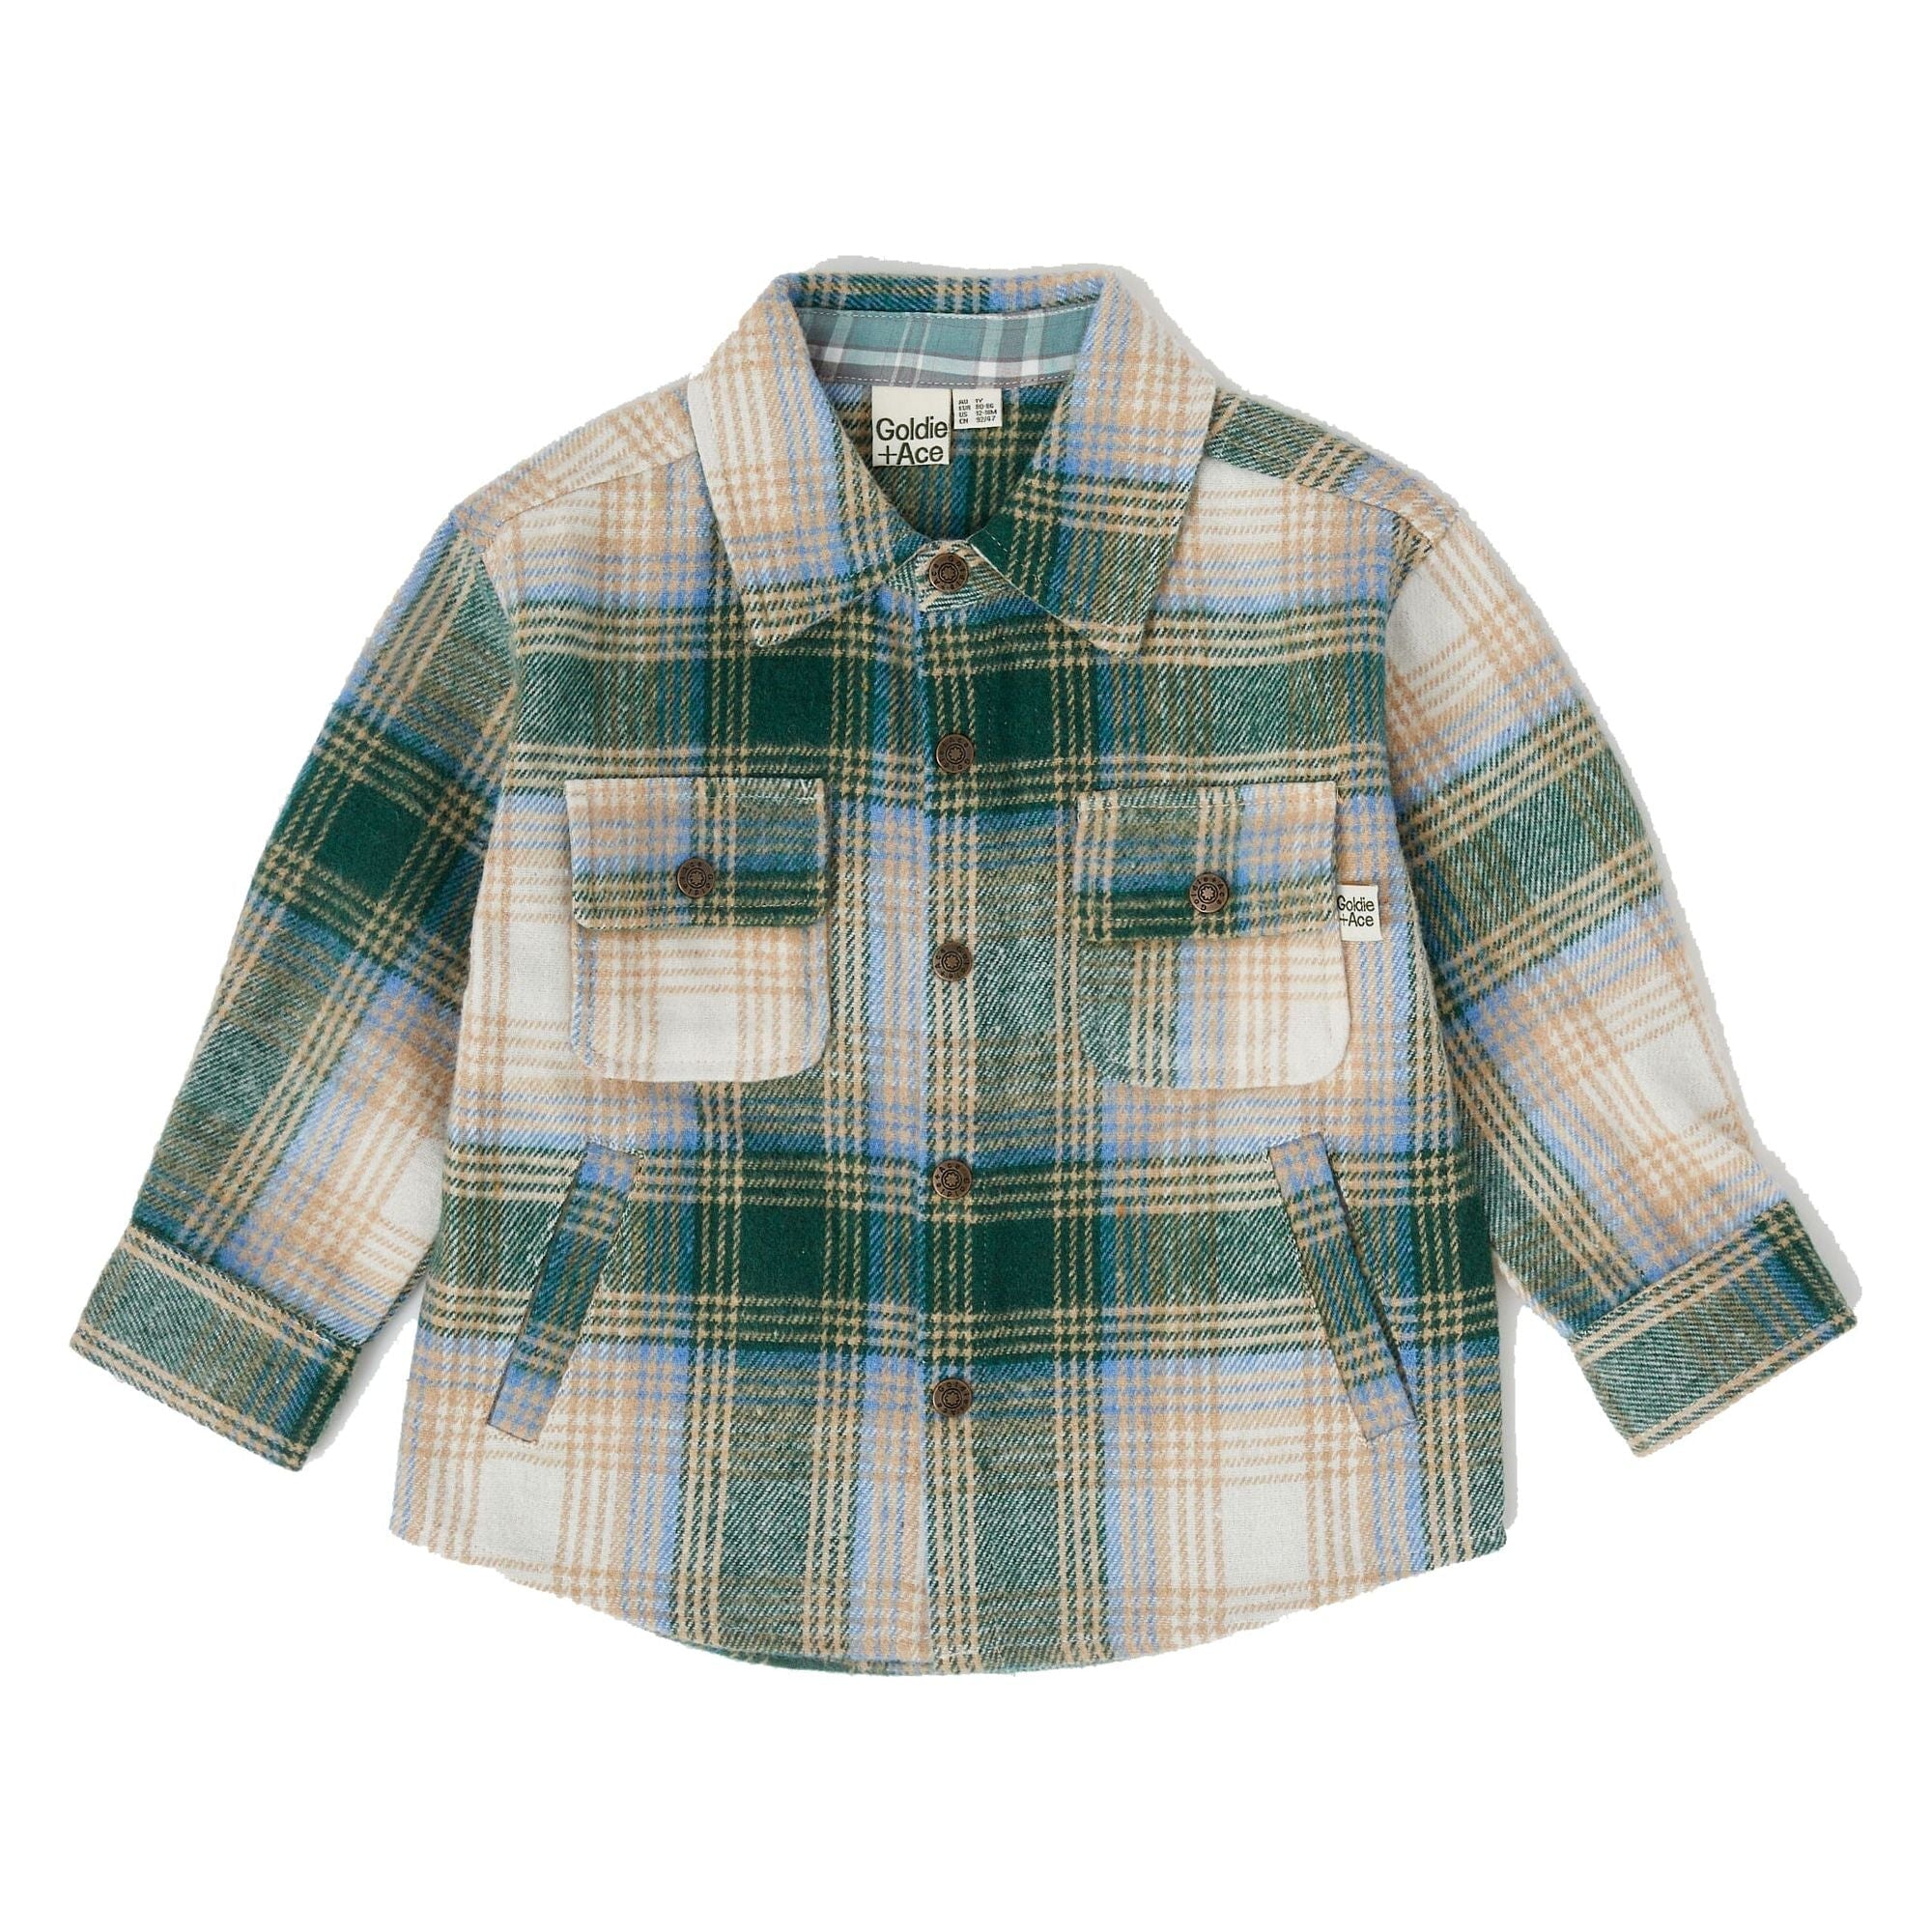 Rowan Check Shirt - Alpine Oat